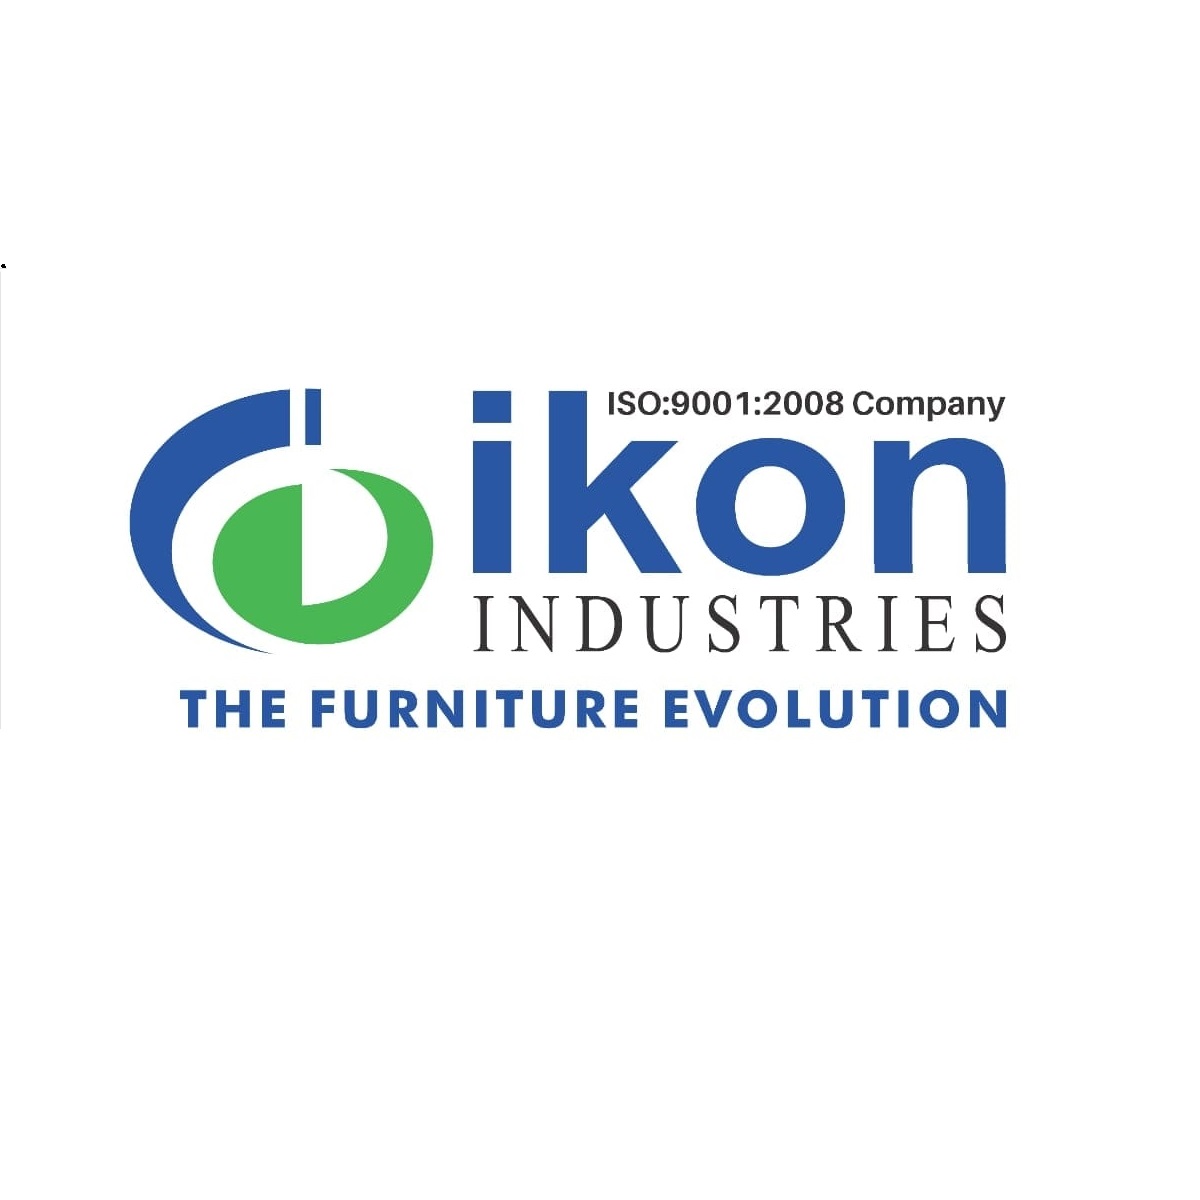 IKON Industries